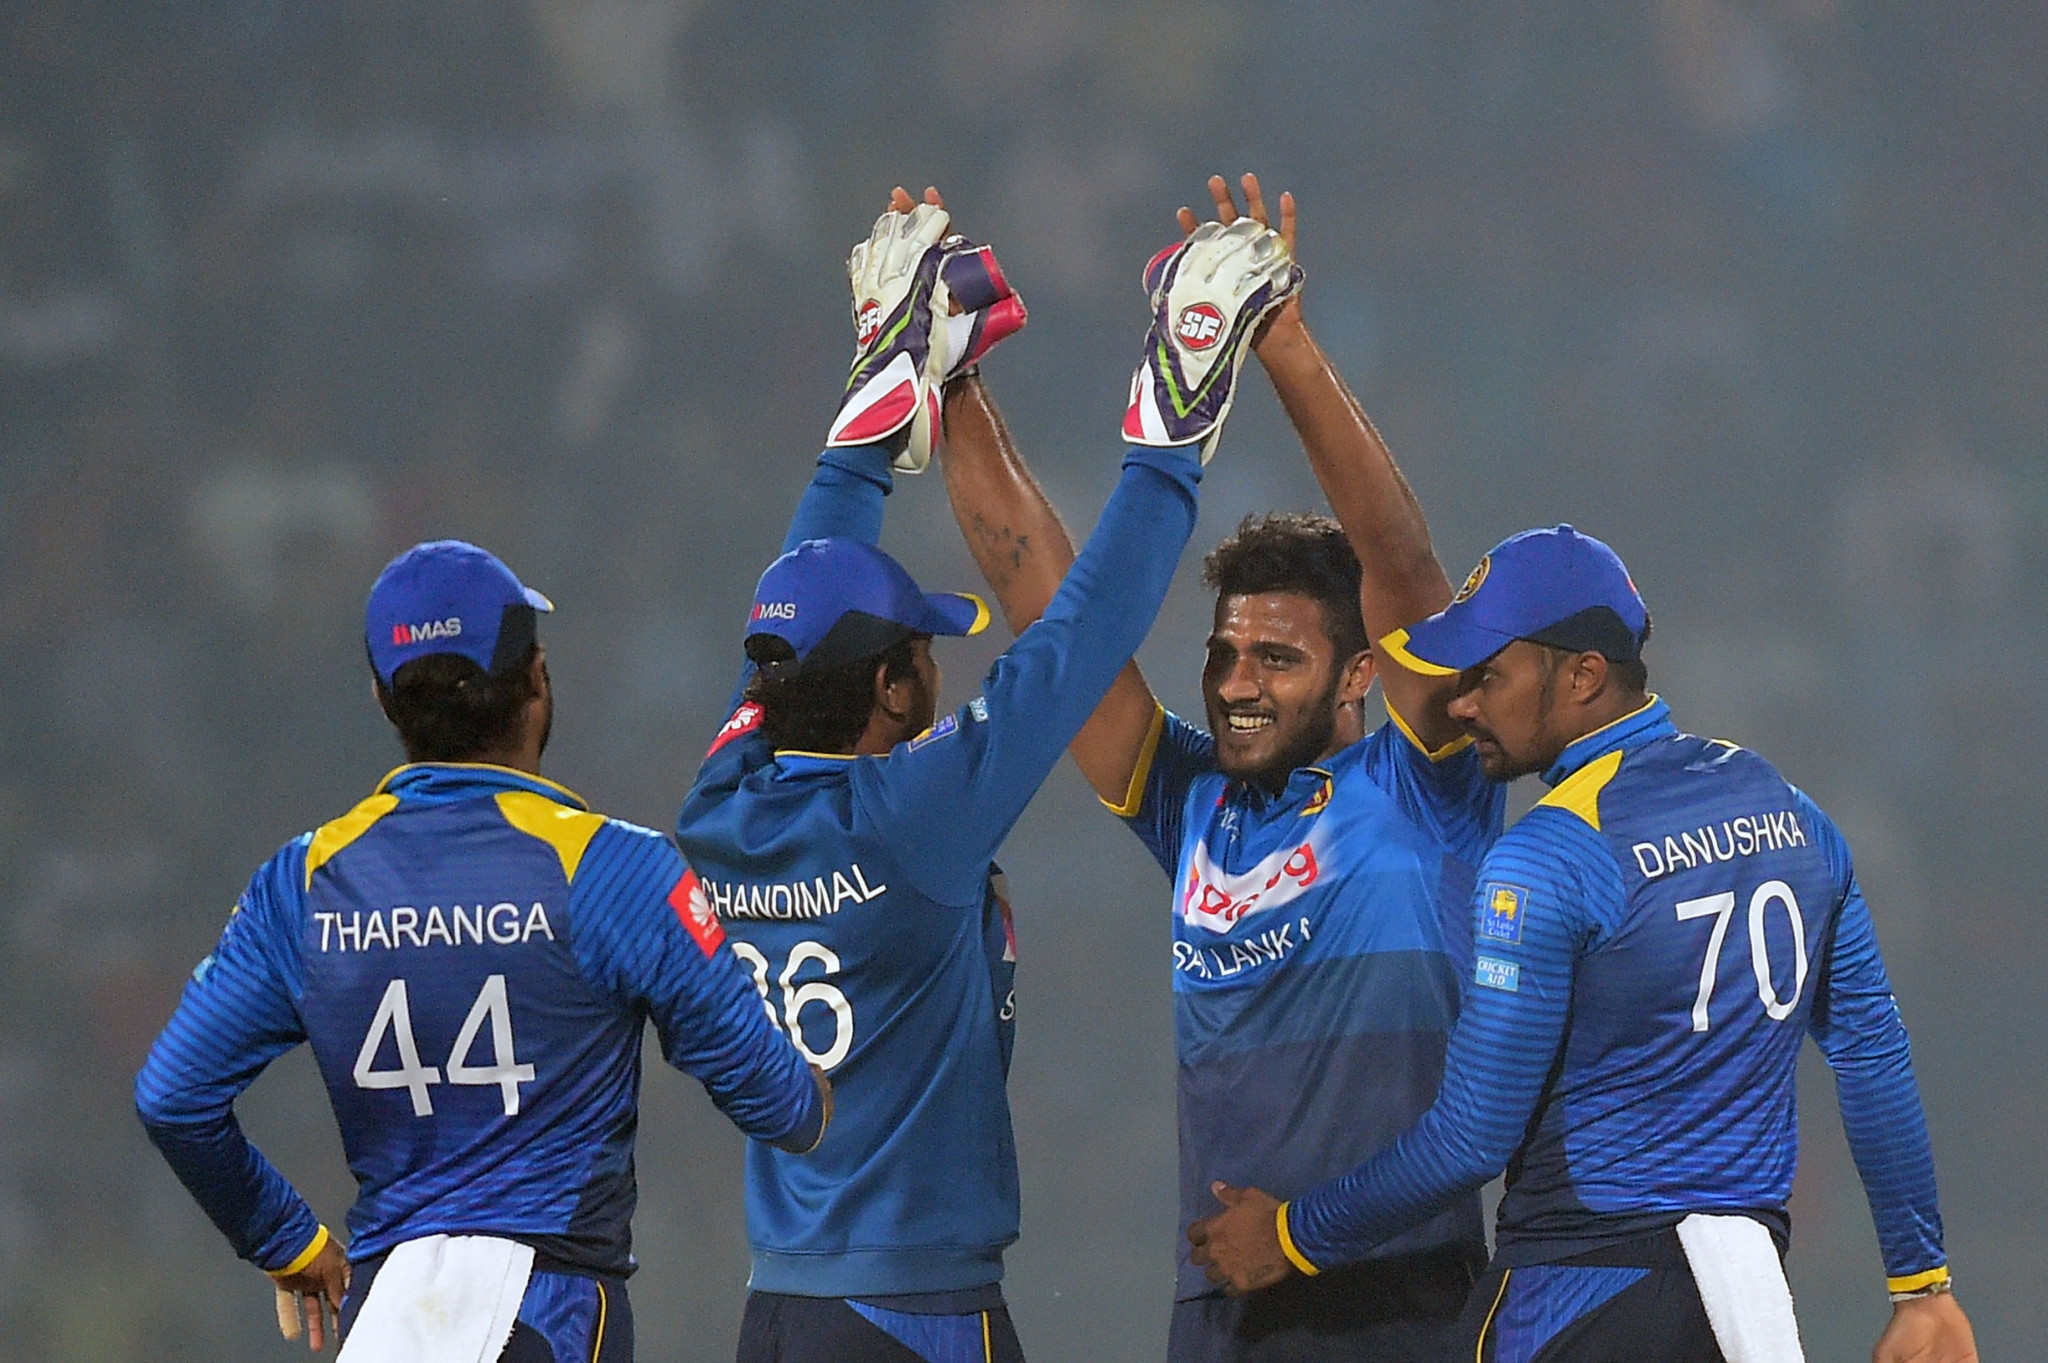 Shehan Madushanka has played three international matches for Sri Lanka ©Getty Images